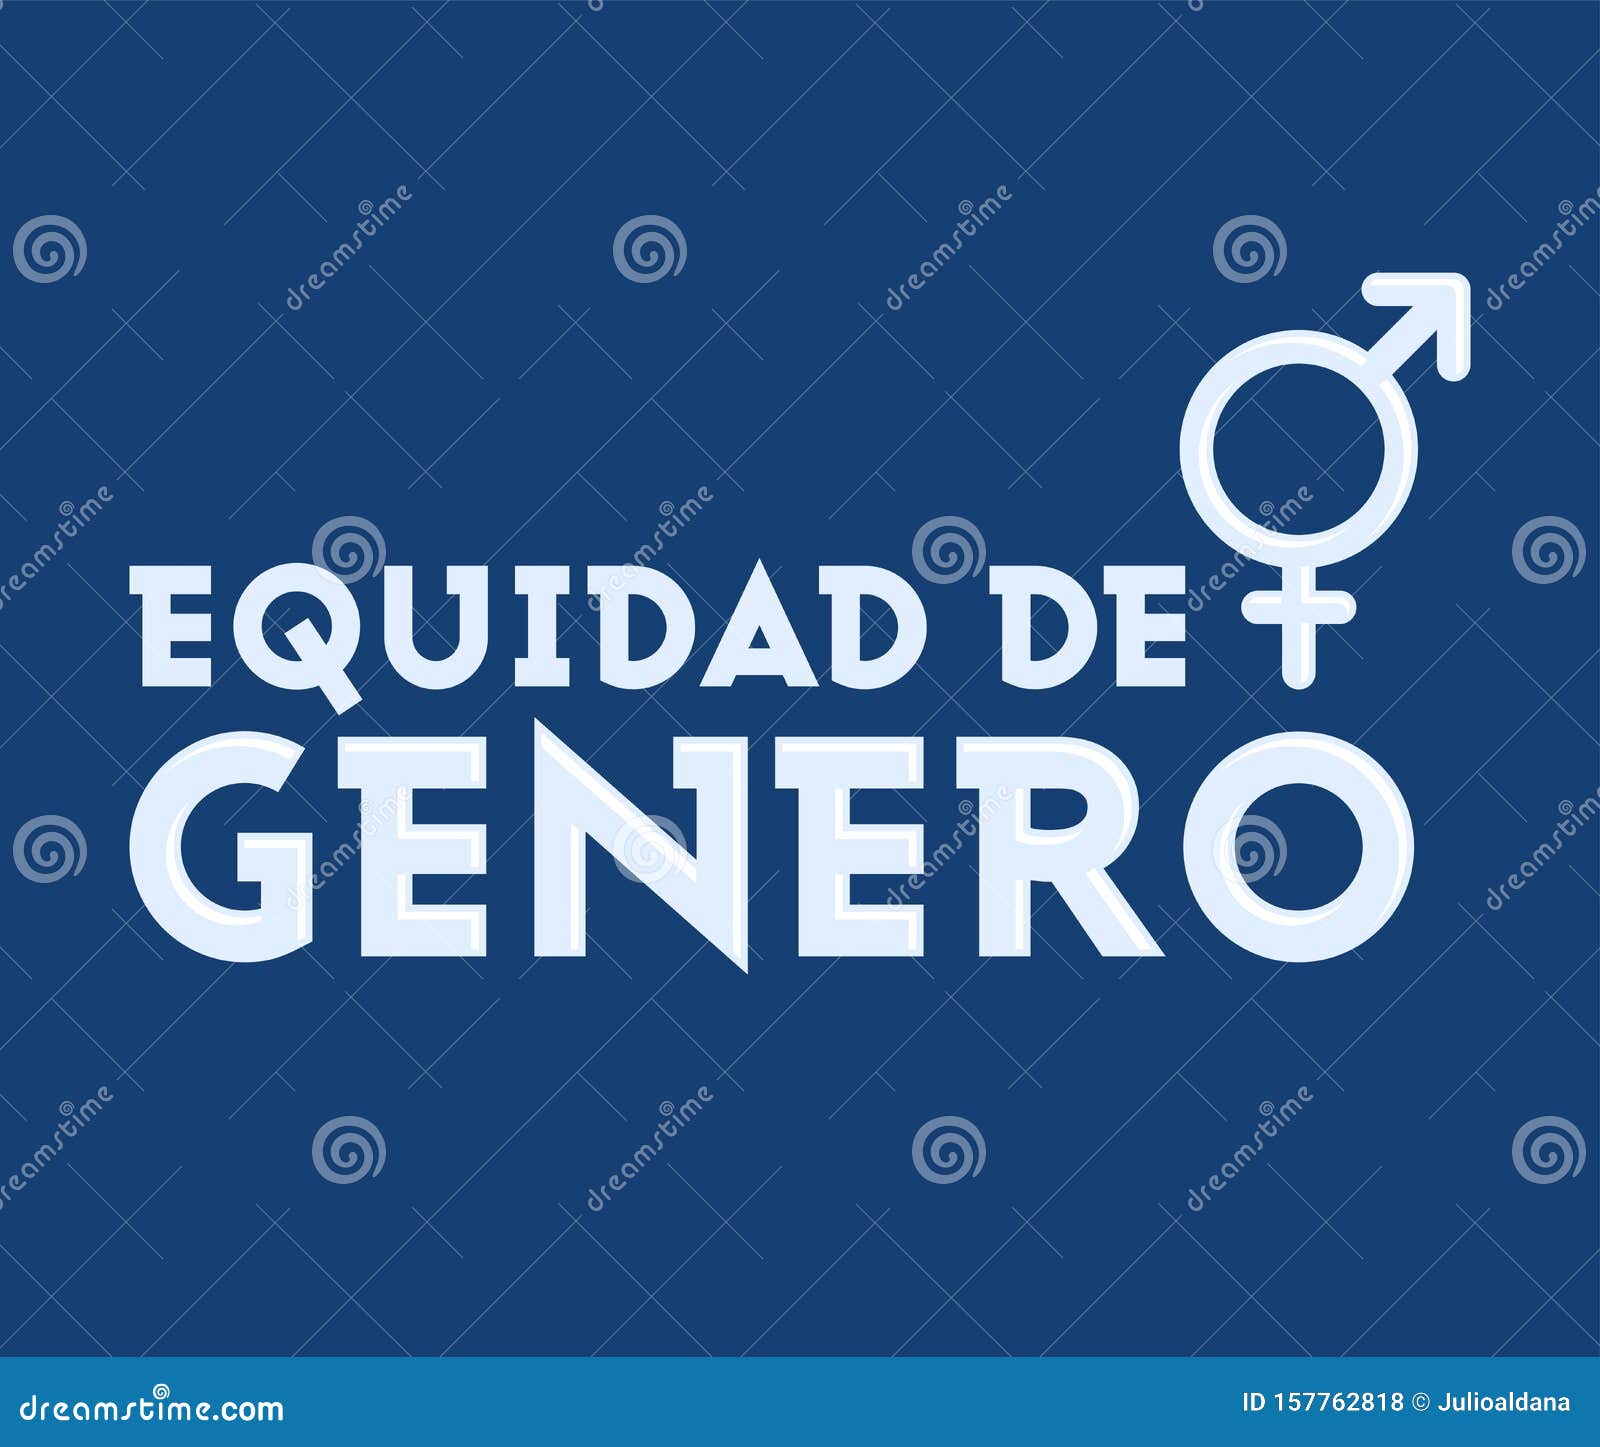 equidad de genero, gender equality spanish text,  emblem .